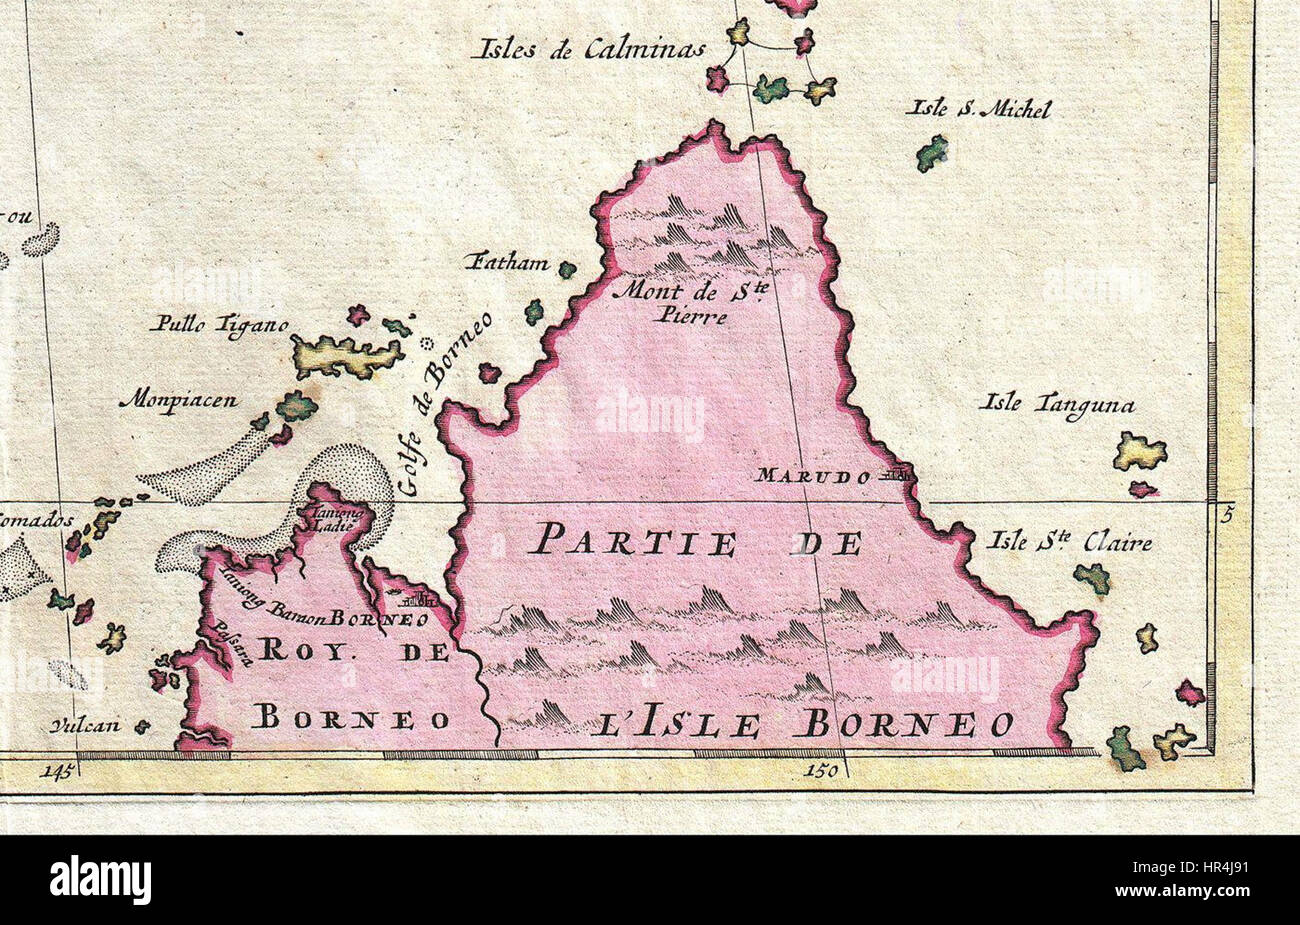 Northern Borneo 1710 Ottens Map of Southeast Asia, Singapore, Thailand (Siam), Malaysia, Sumatra, Borneo - Geographicus - Siam-ottens-1710 Stock Photo